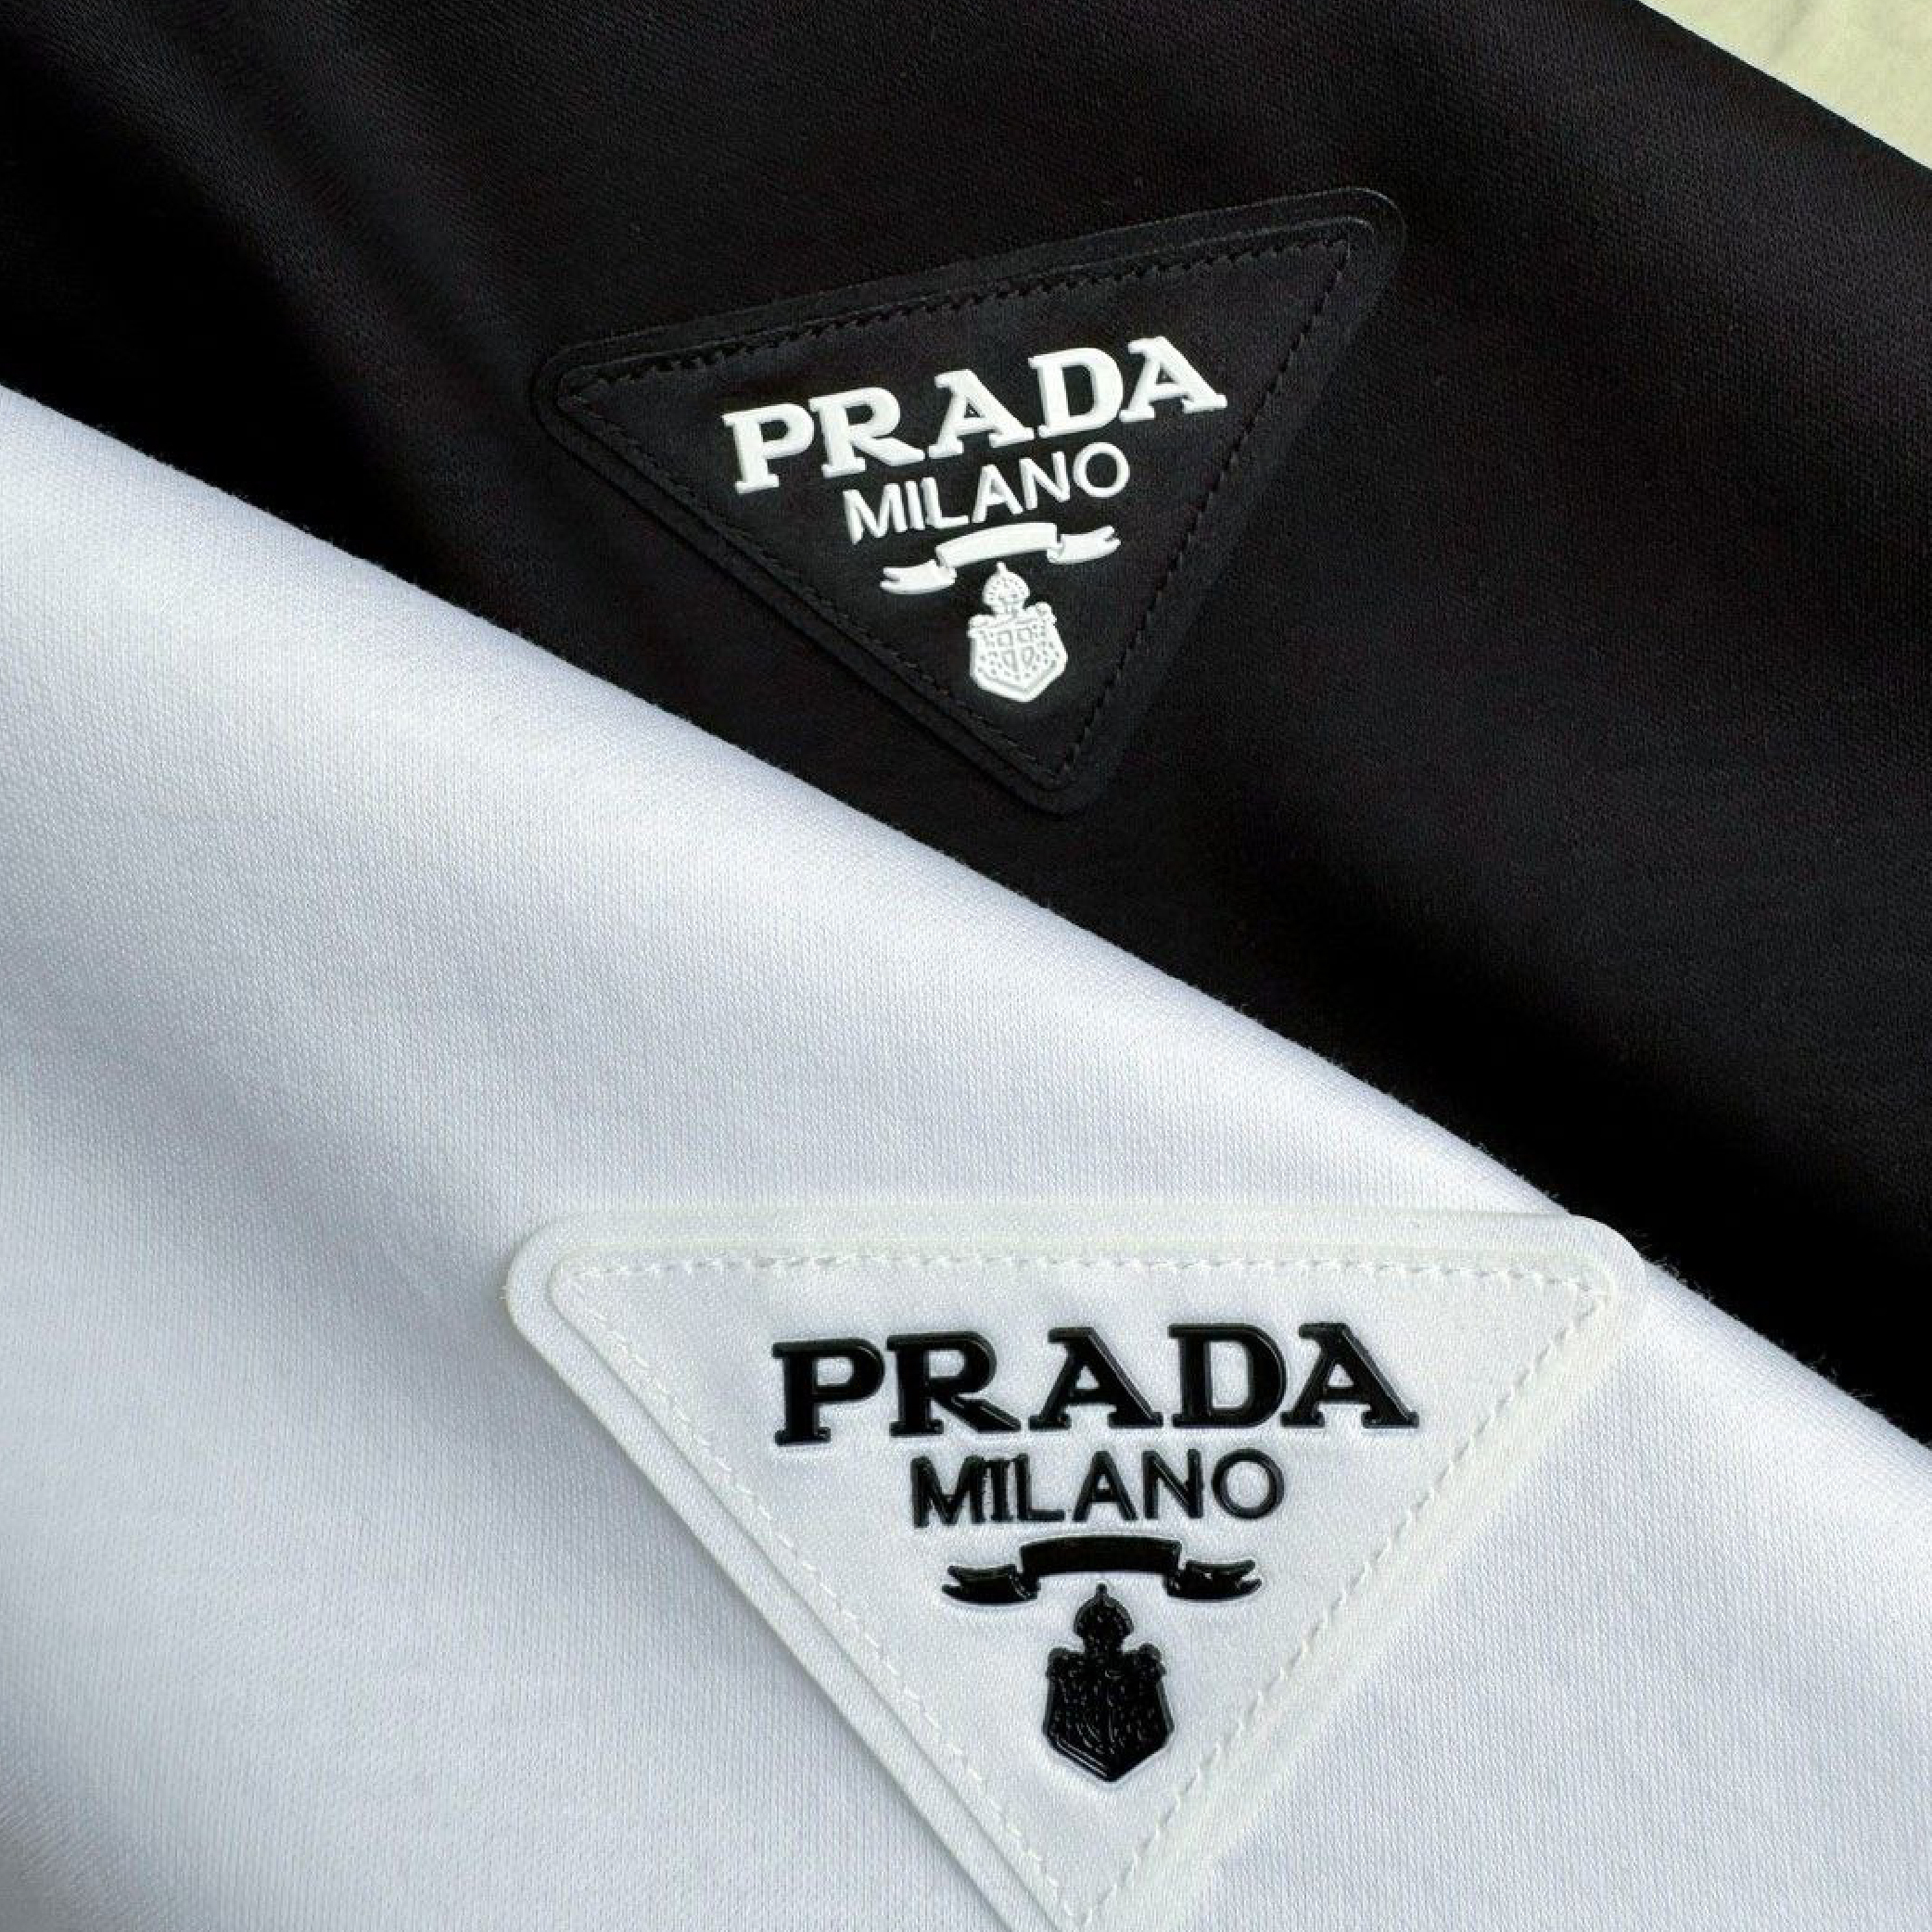 Prada Milano-04